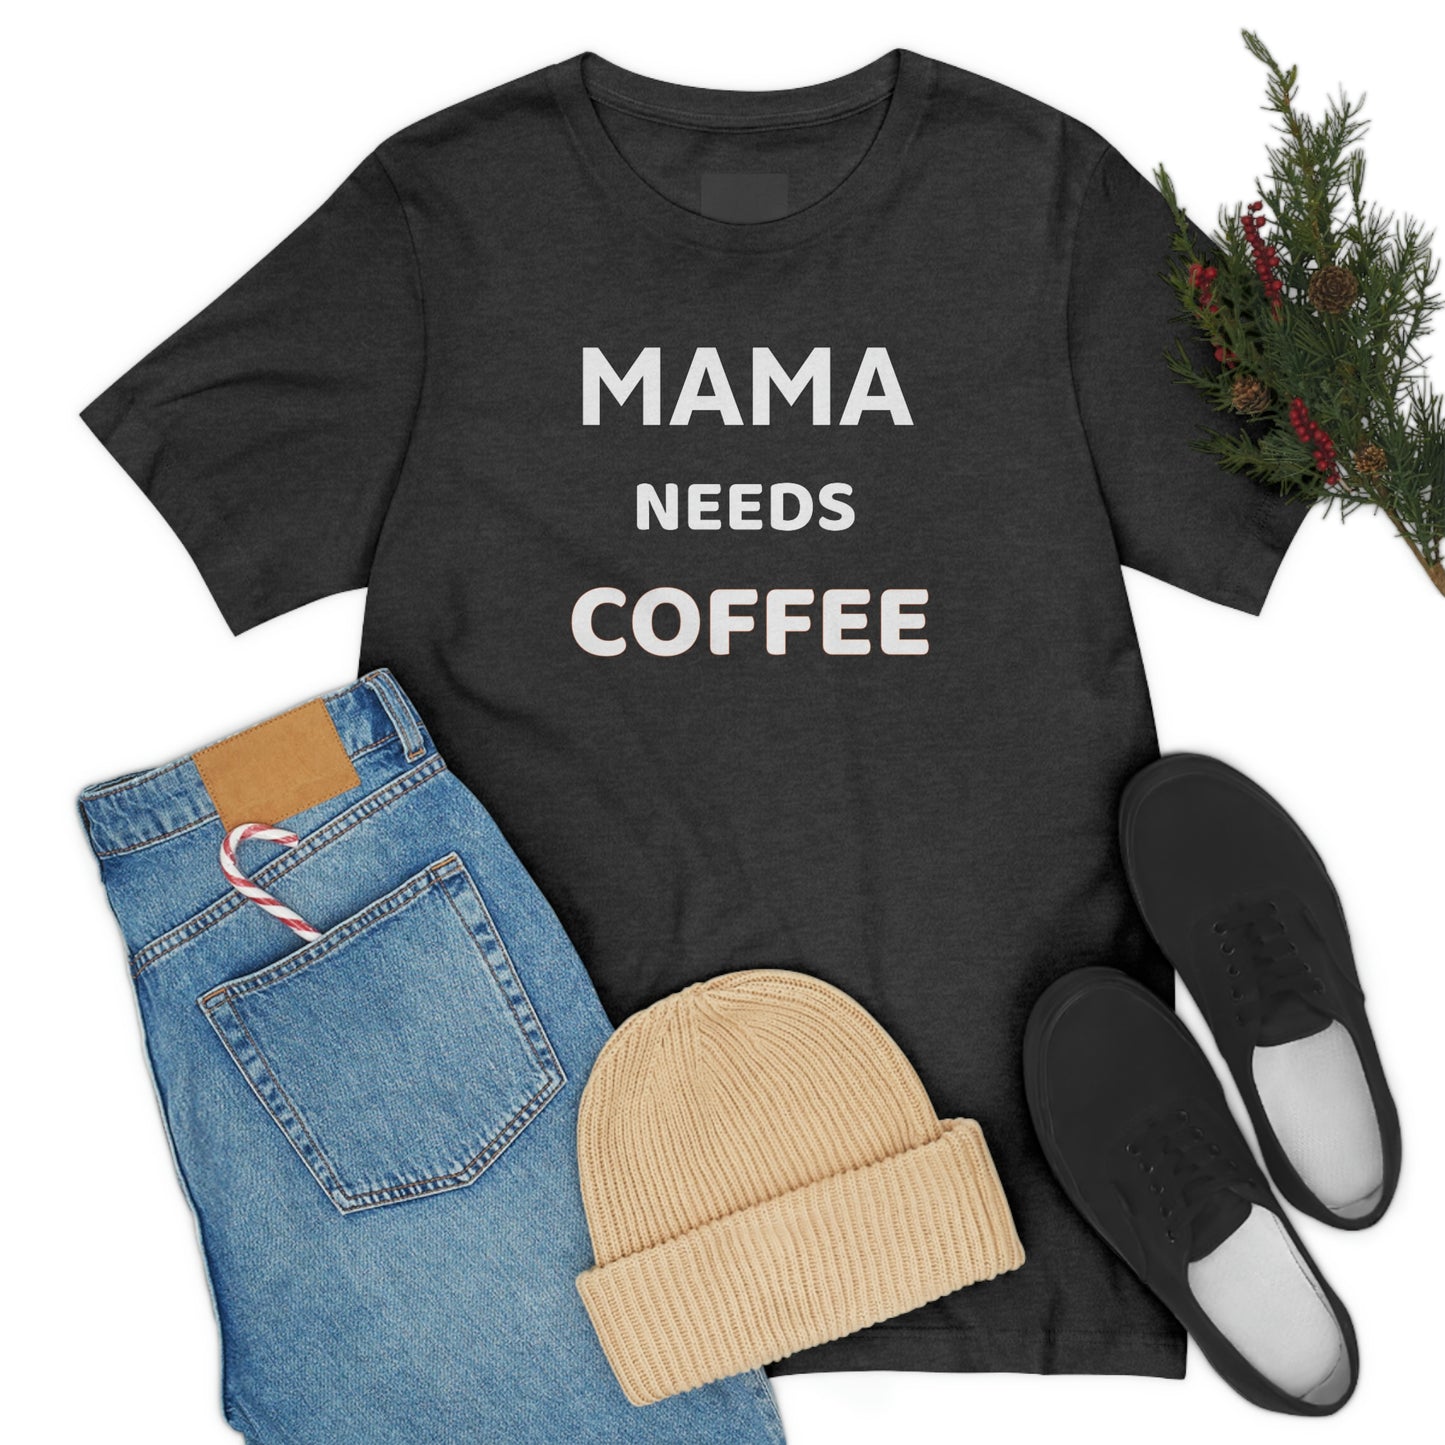 Mama needs Coffee - coffee lover shirt, funny coffee shirt - funny shirt